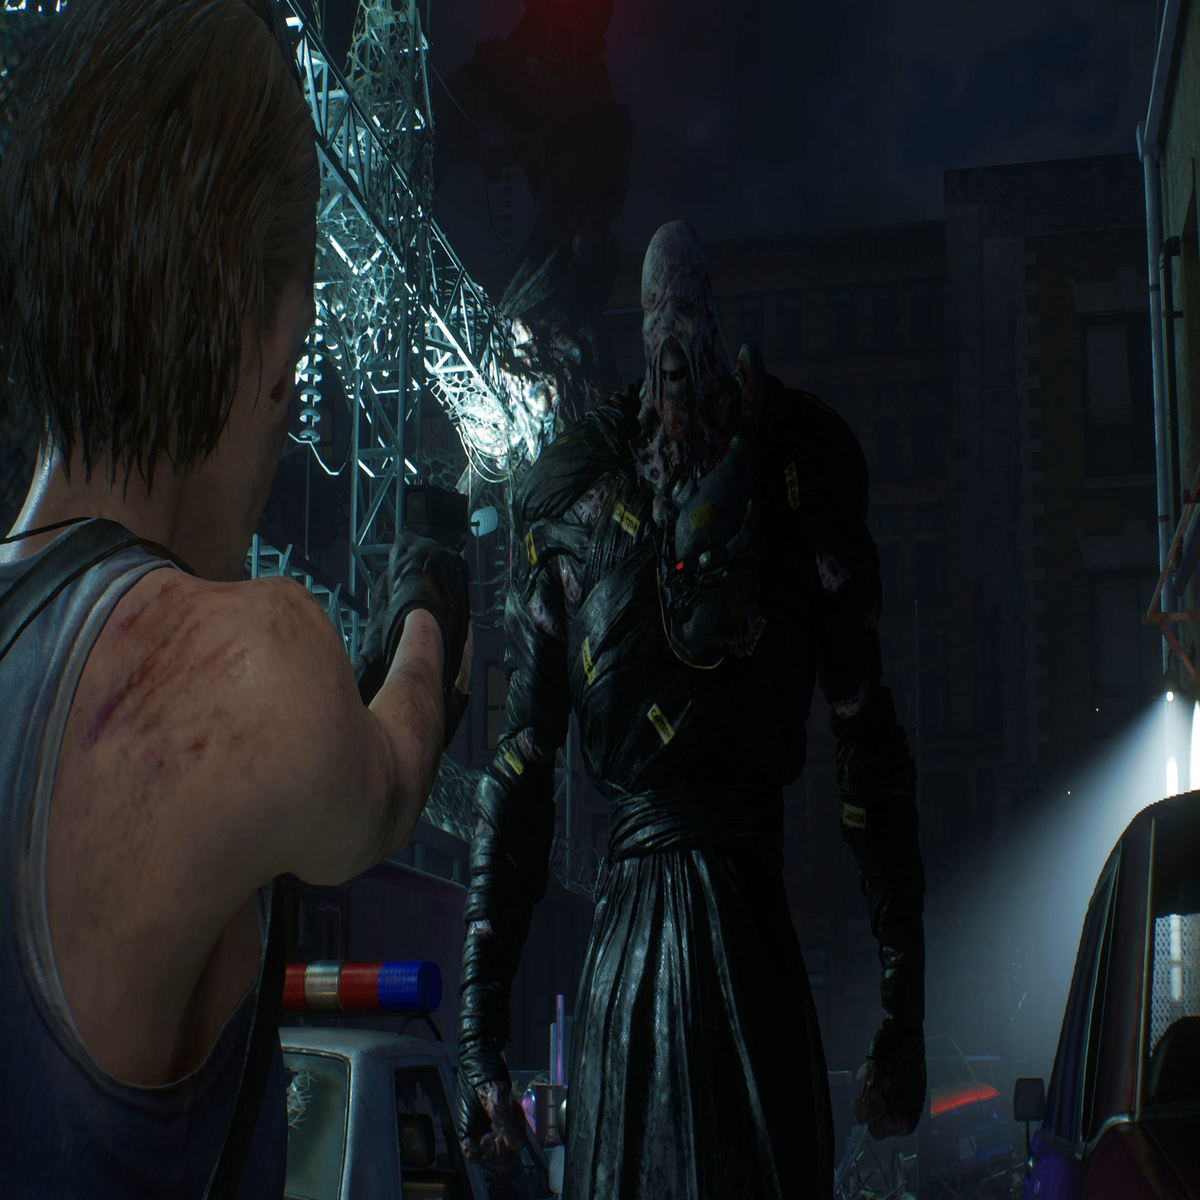 Nemesis Figure Resident Evil 3 Remake 